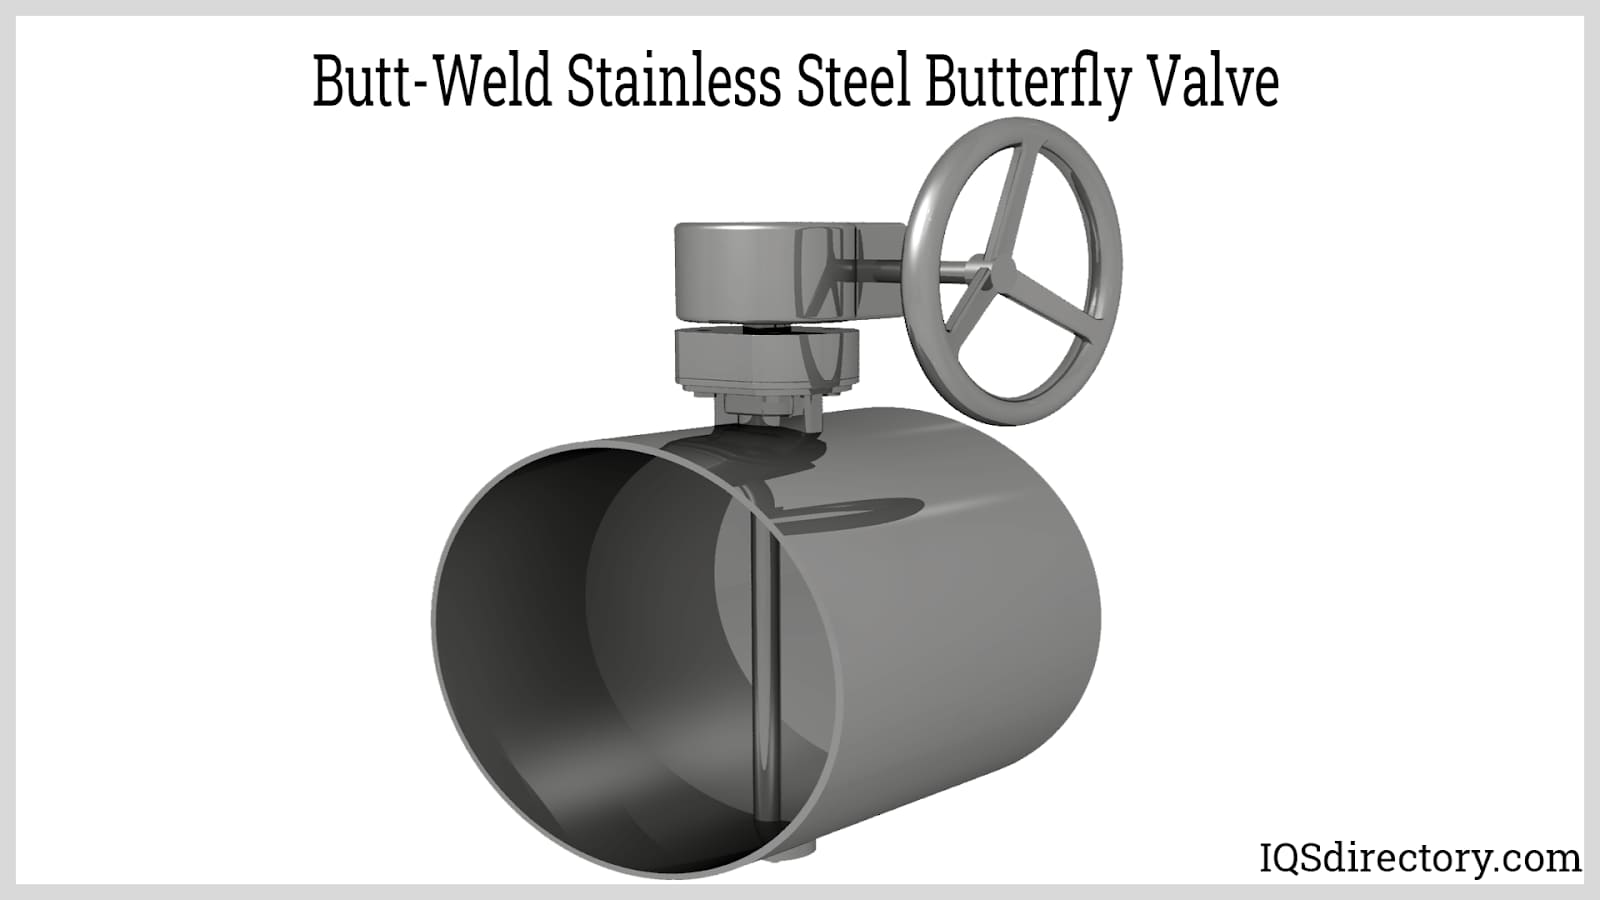 Butt-Weld Stainless Steel Butterfly Valve